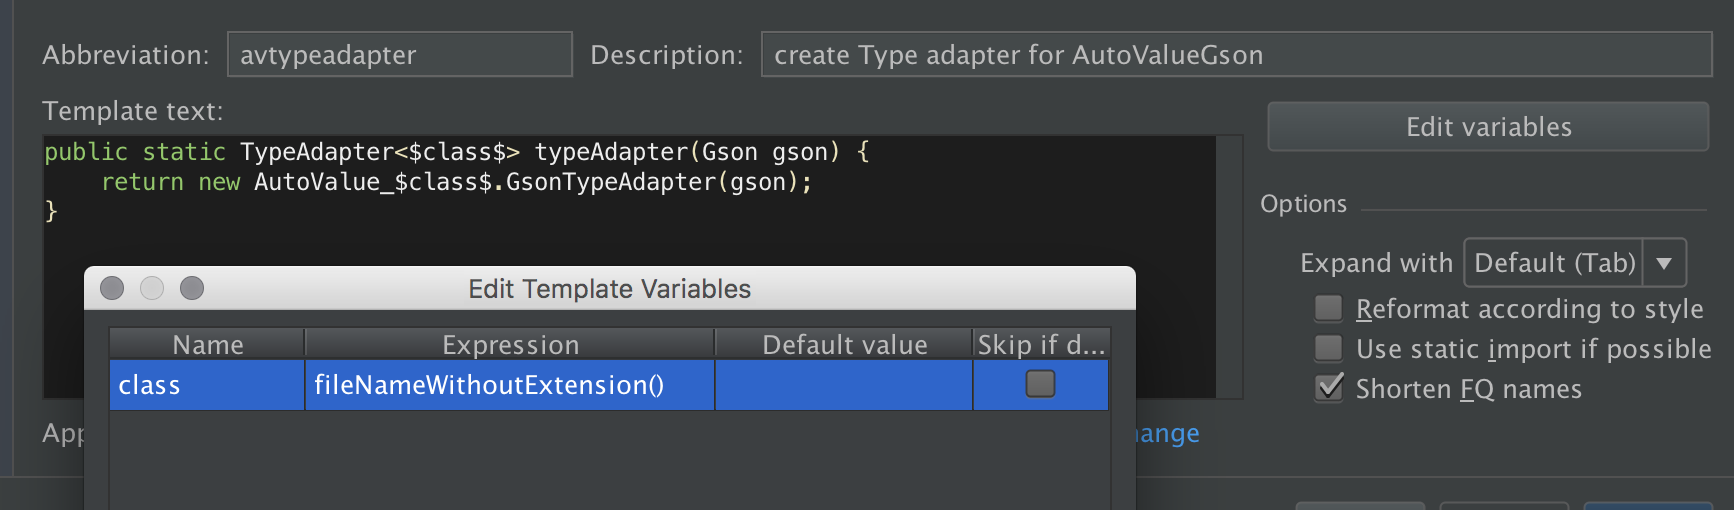 Type Adapter Live template setup